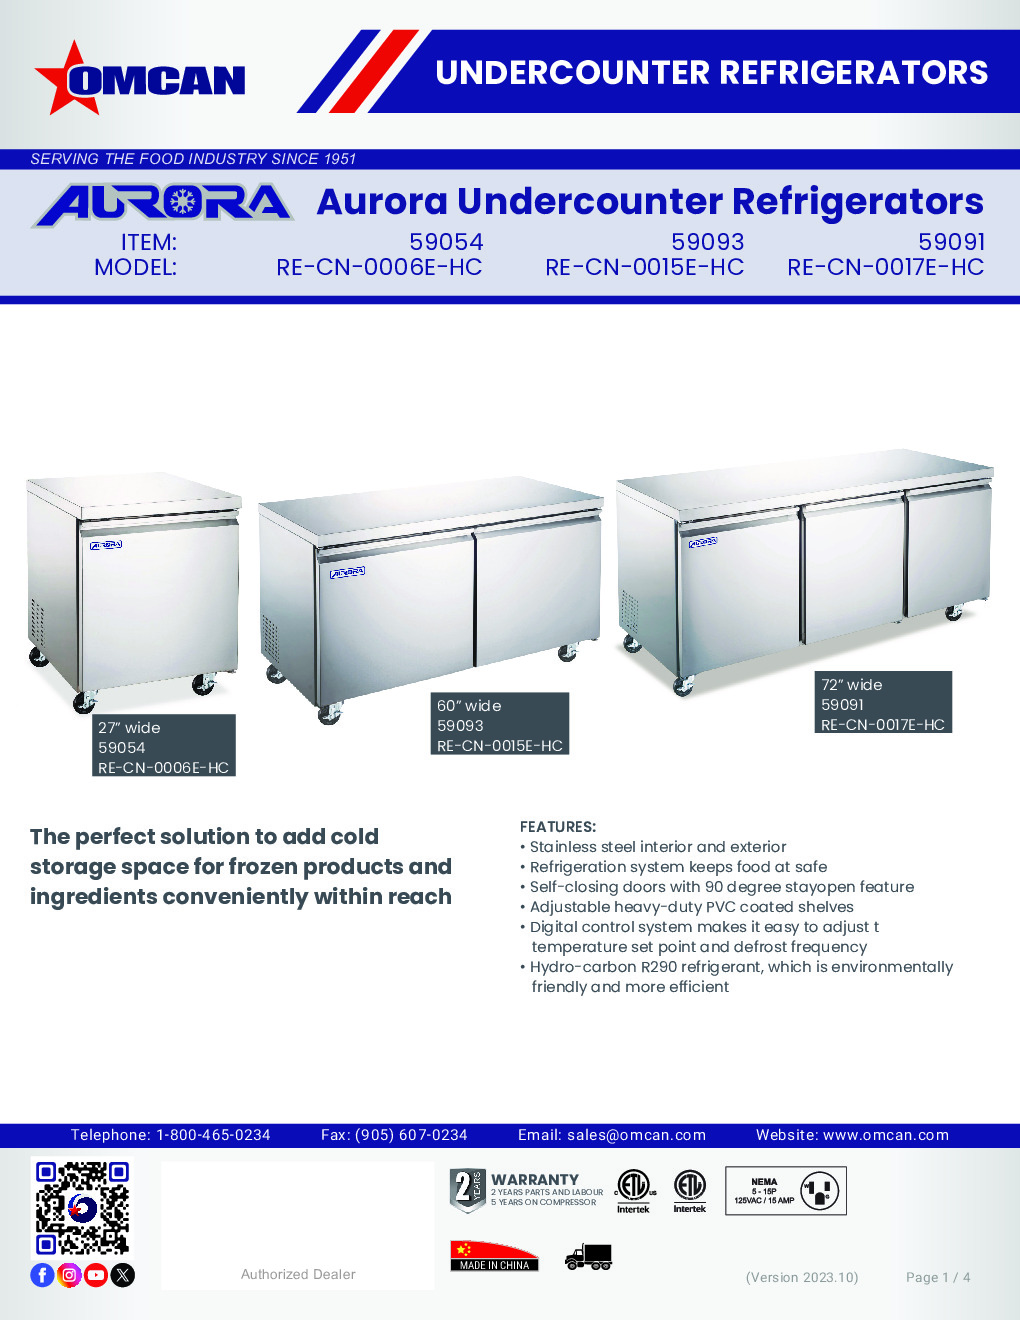 Omcan USA 59093 Reach-In Undercounter Refrigerator